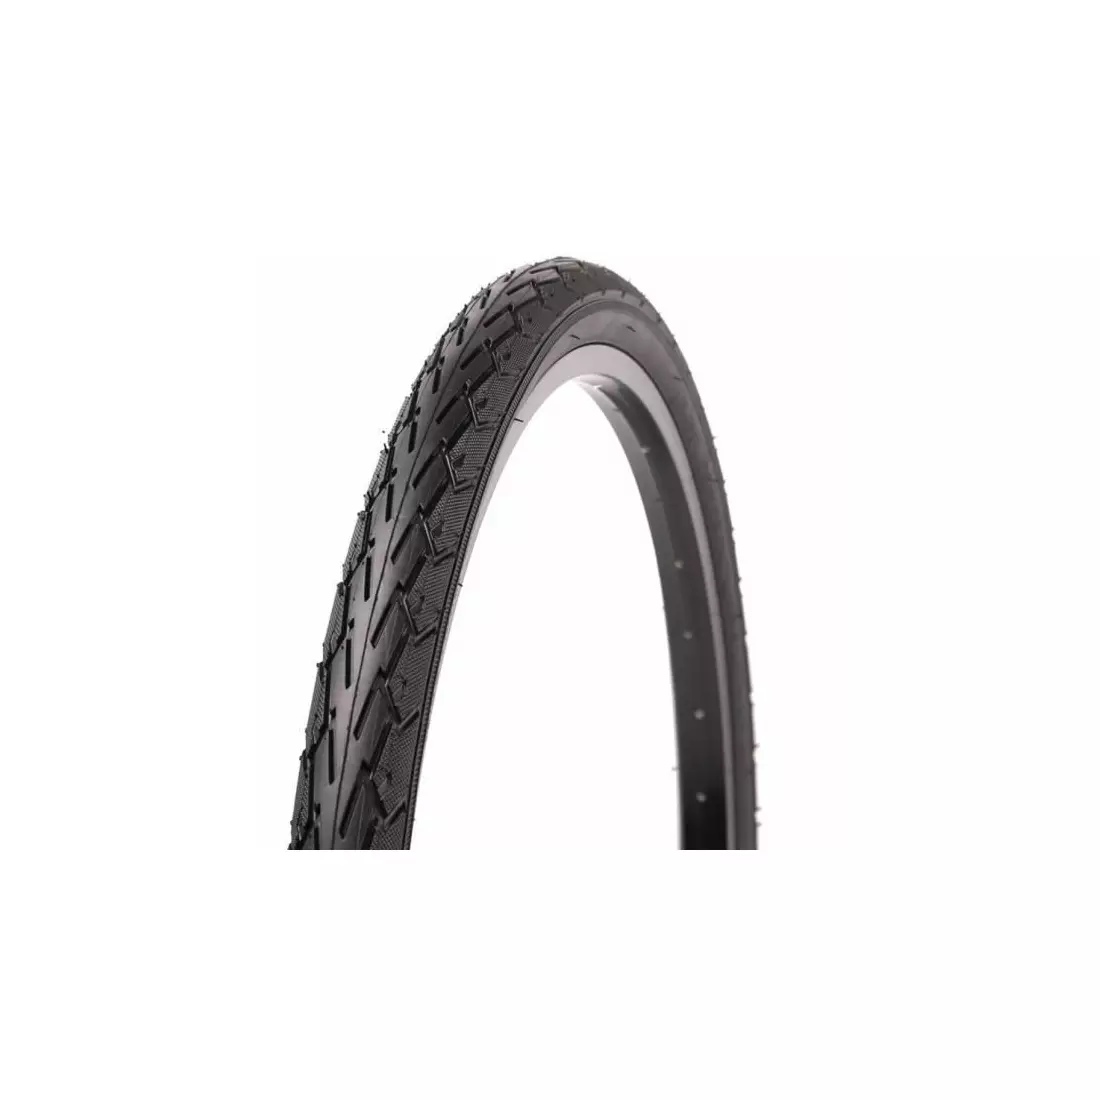 FREEDOM Bike tire 700x38C SCORCHER sport F012-0271